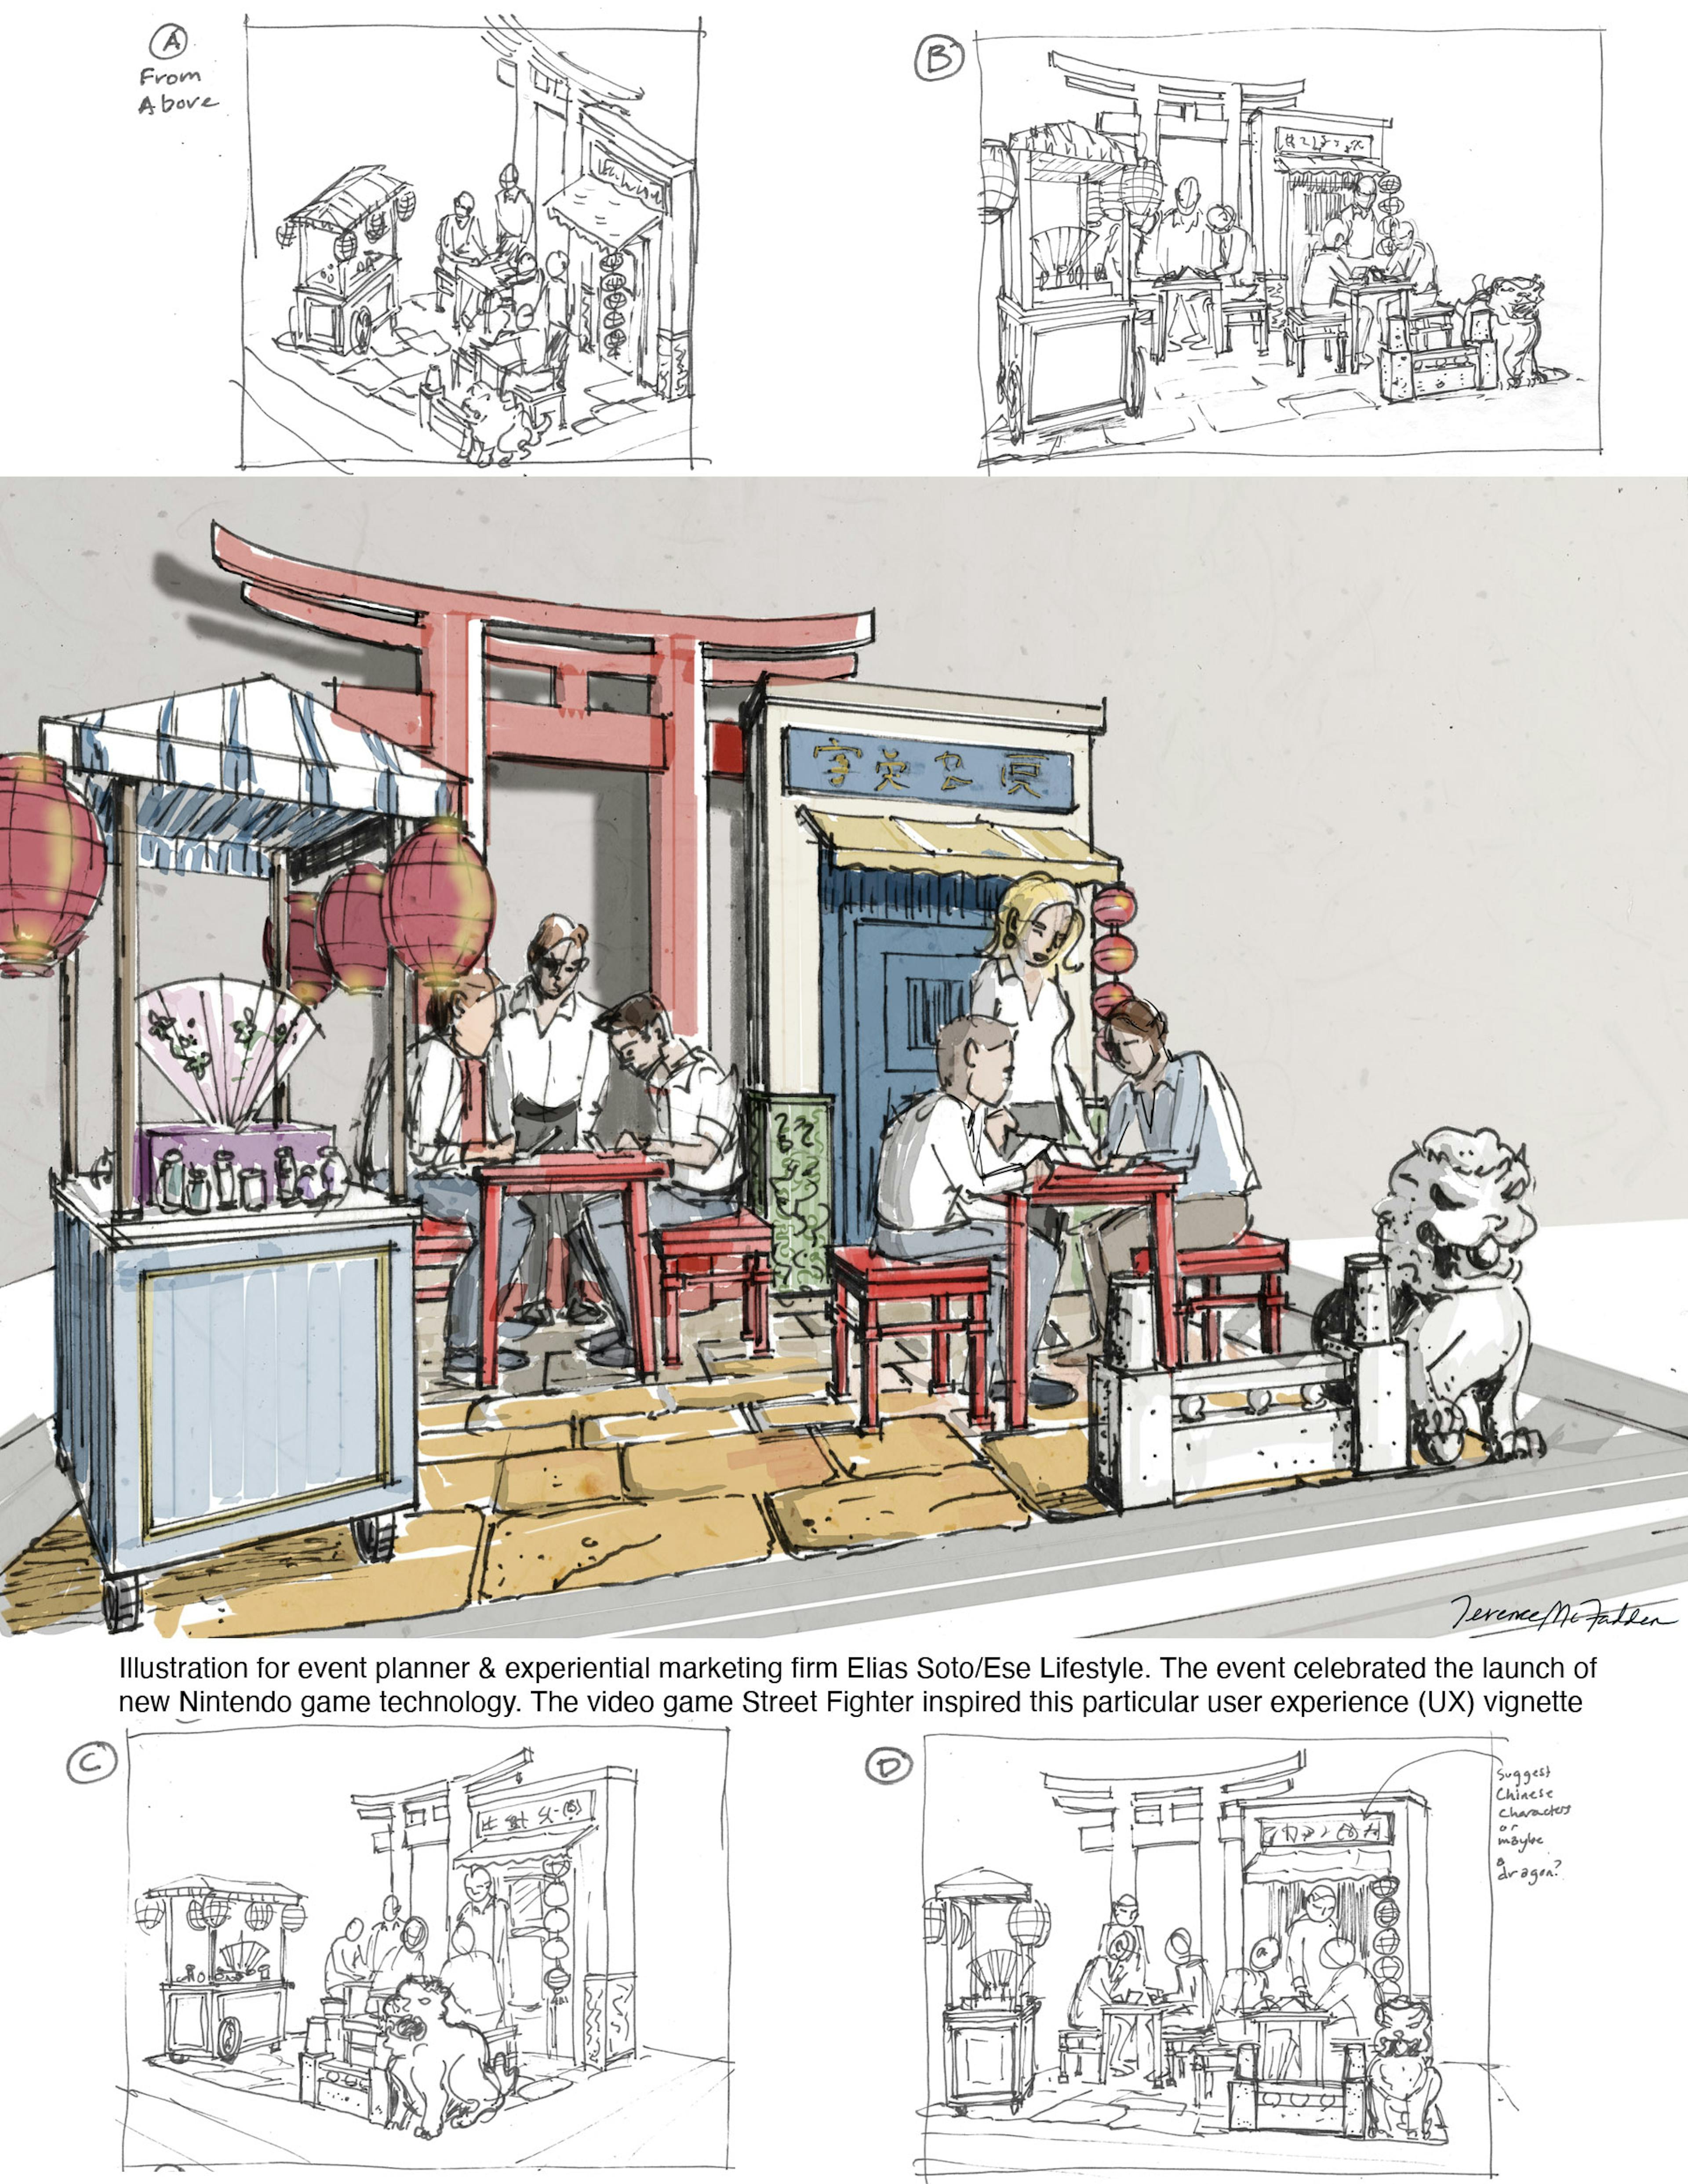 Concept sketch of an outdoor restaurant